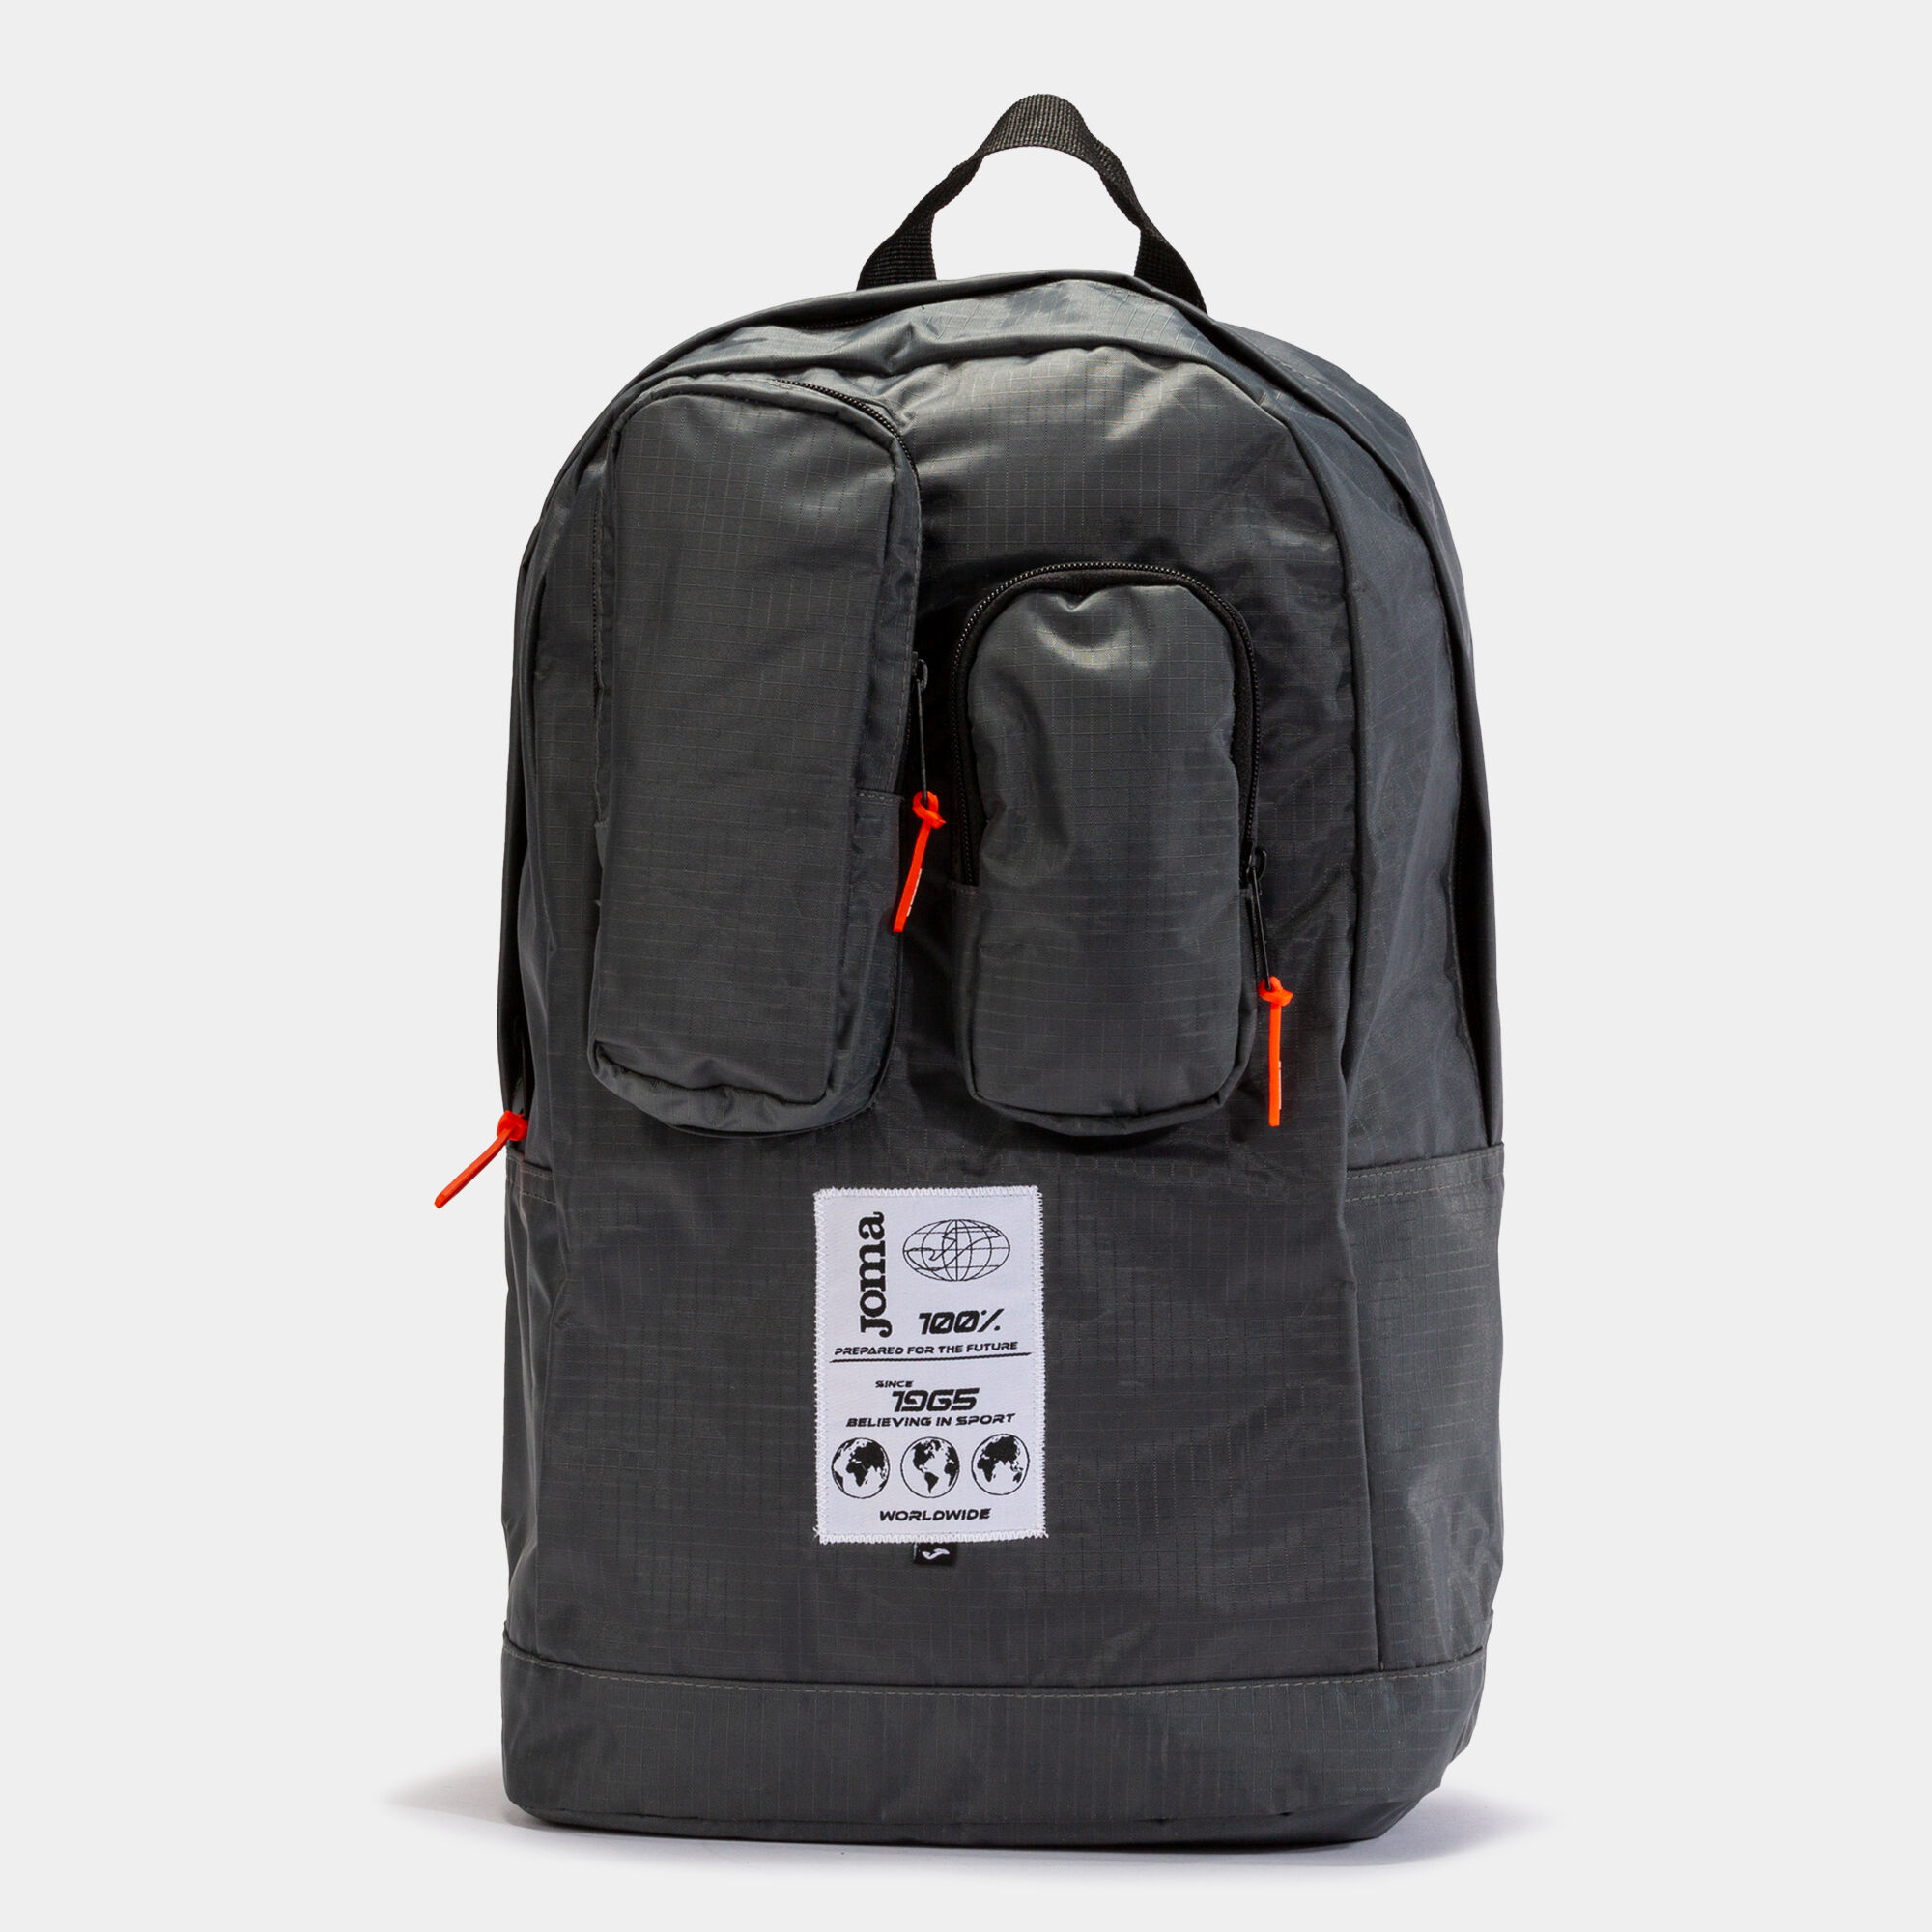 Backpack - shoe bag Worldwide dark gray